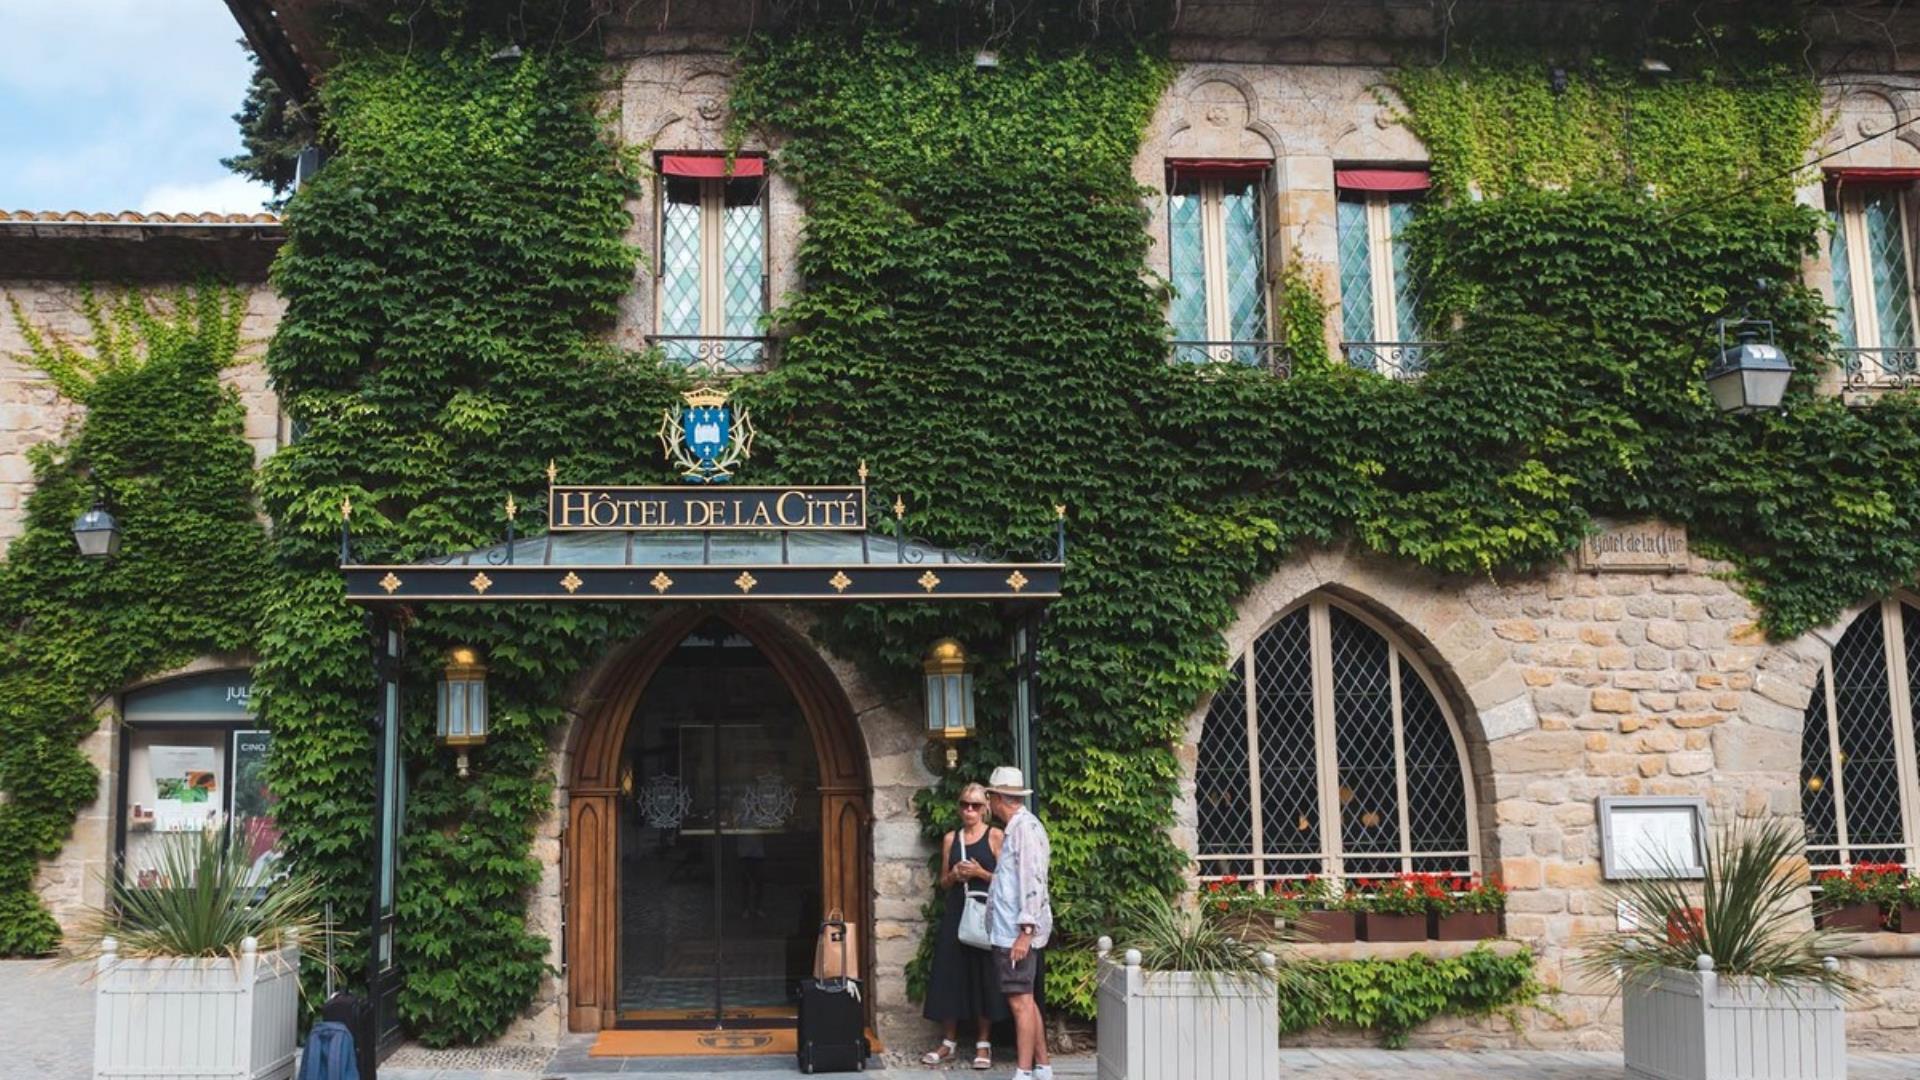 HOTEL DE LA CITE